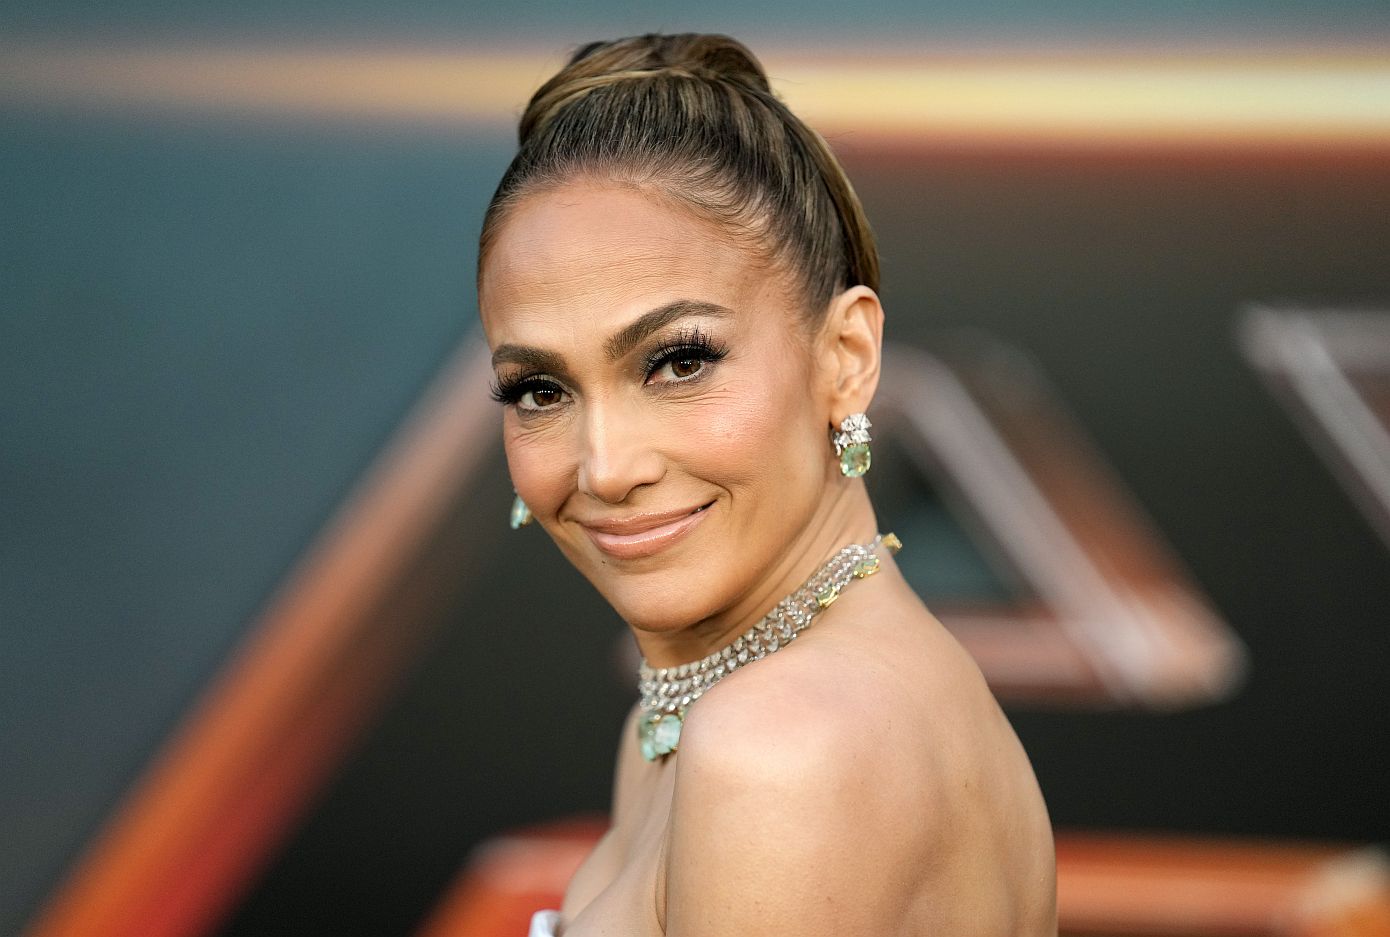 H Jennifer Lopez έκανε το μανικιούρ «μπαλαντέρ» που δείχνει πιο μακριά και λεπτά τα δάχτυλα